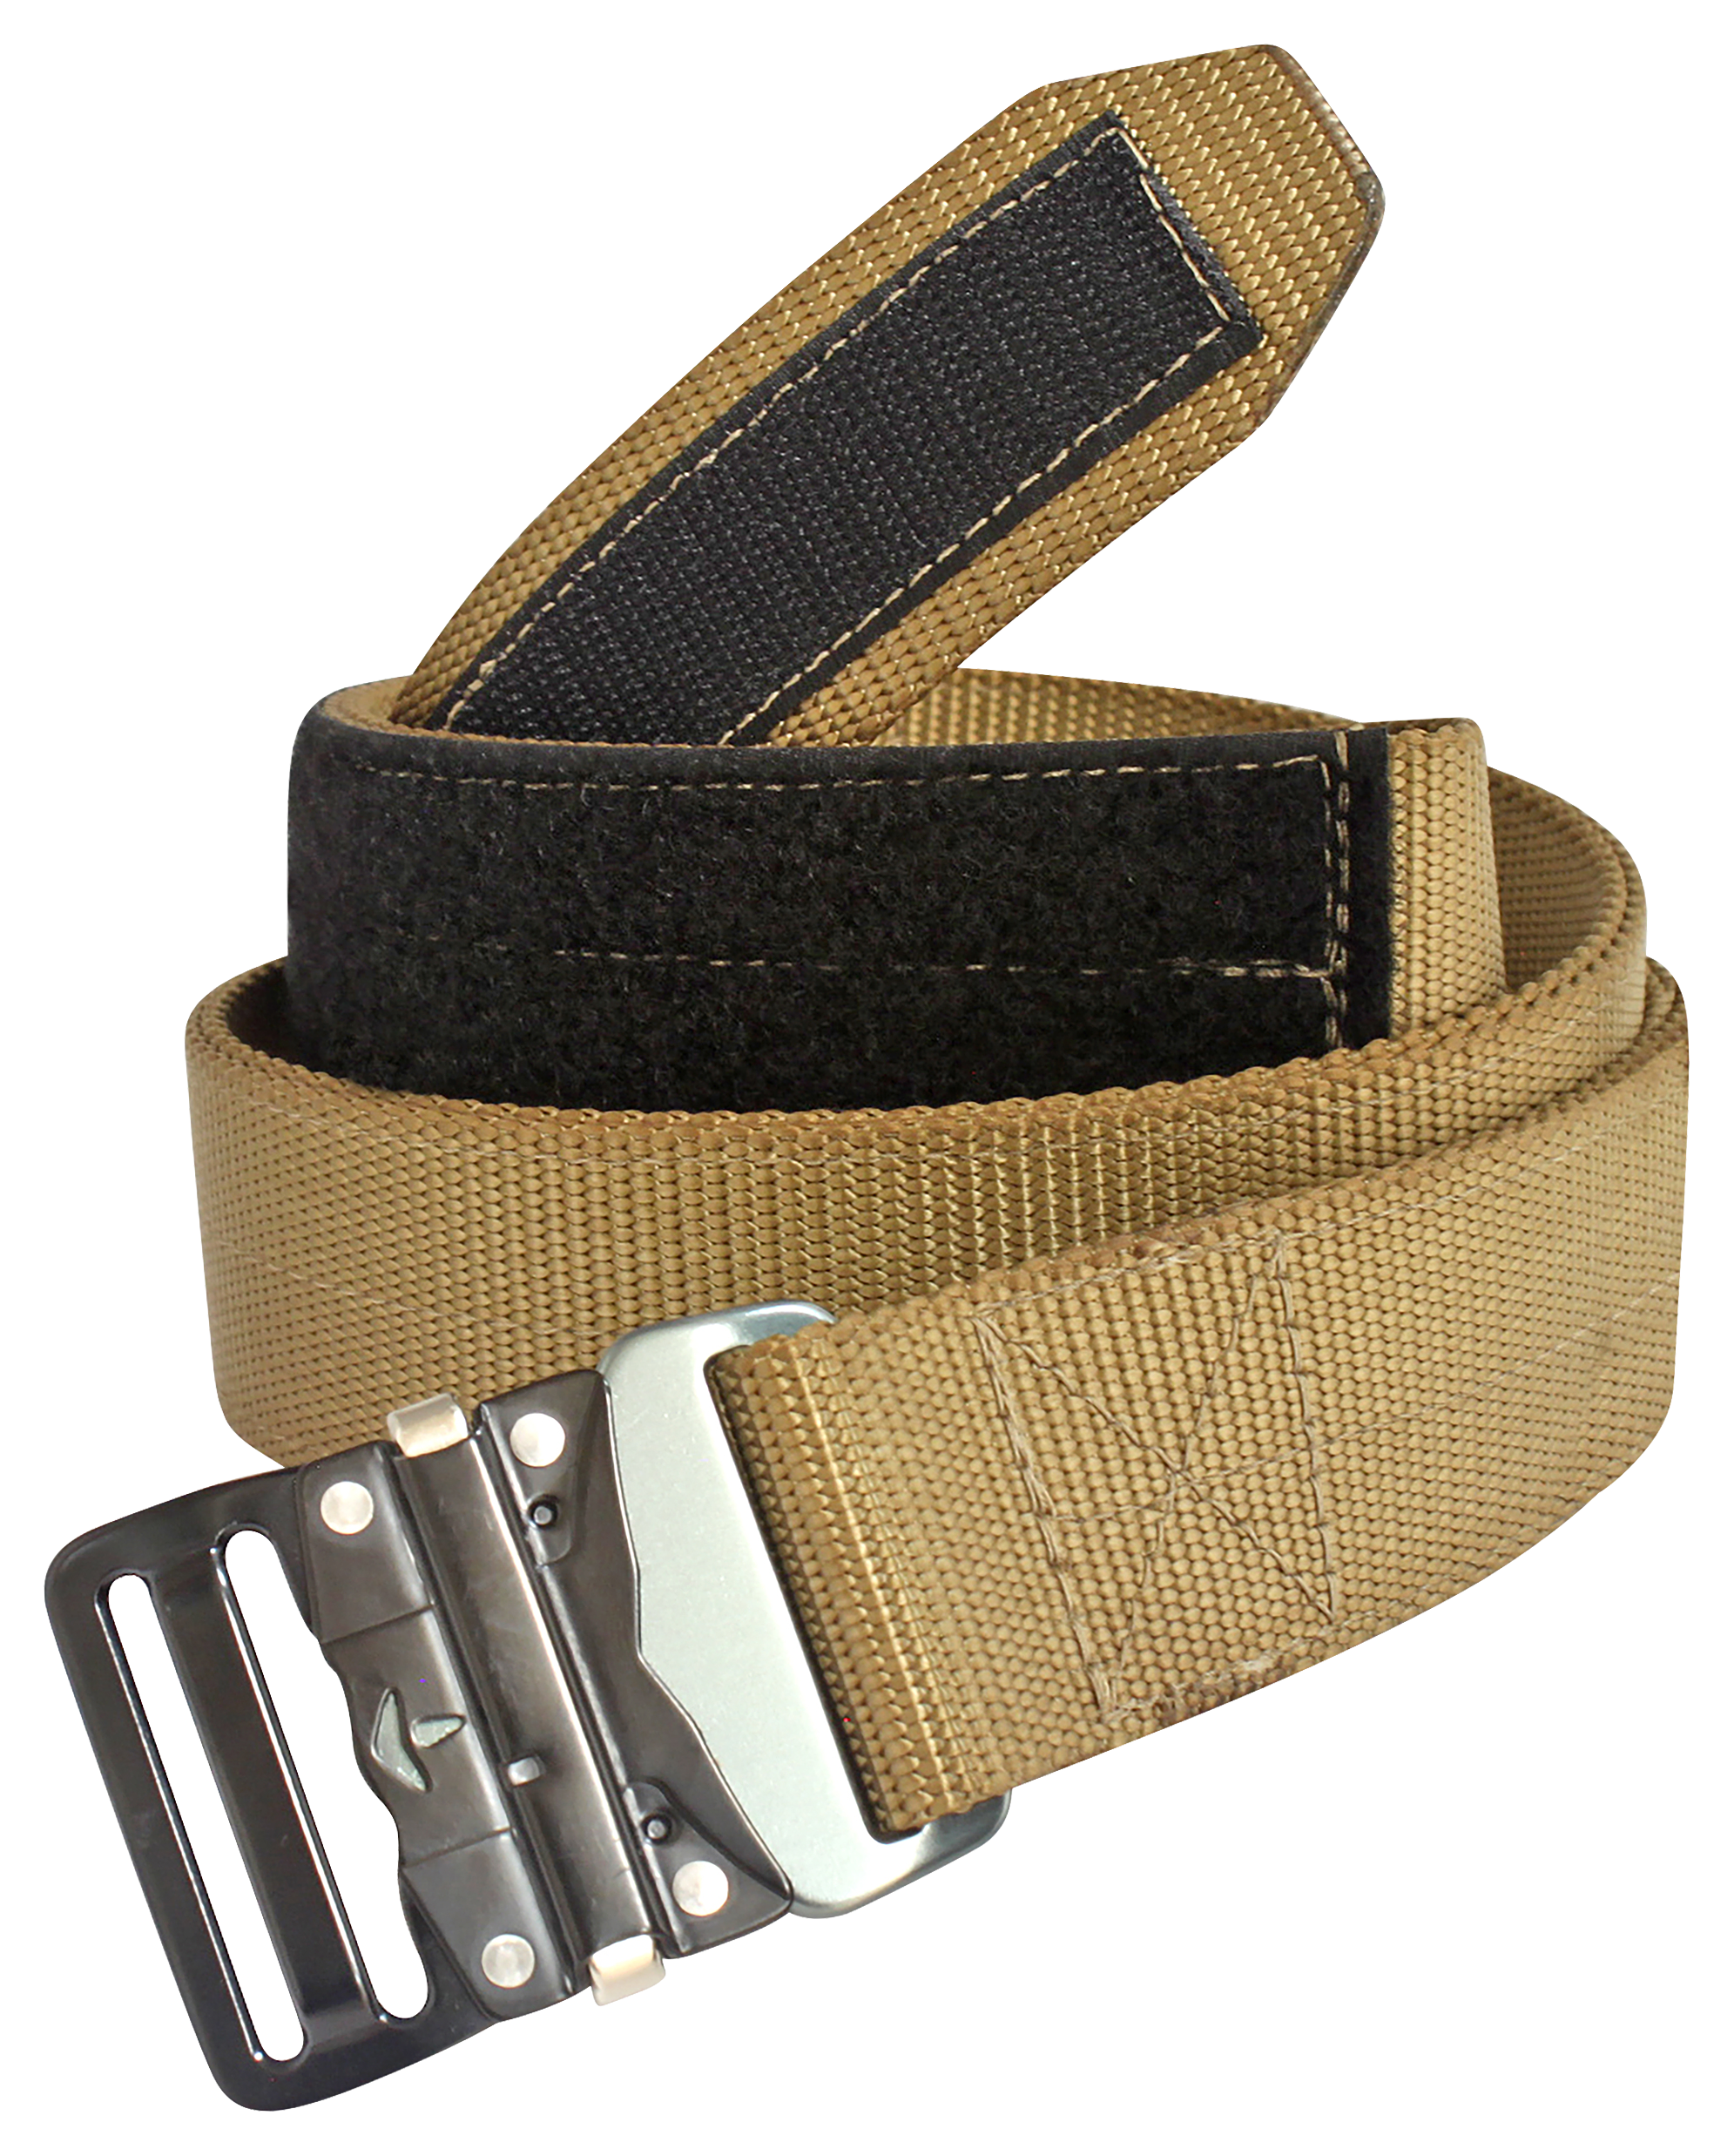 Bison Designs LoPro Heavy-Duty Buckle Belt for Men - Coyote Brown - XL